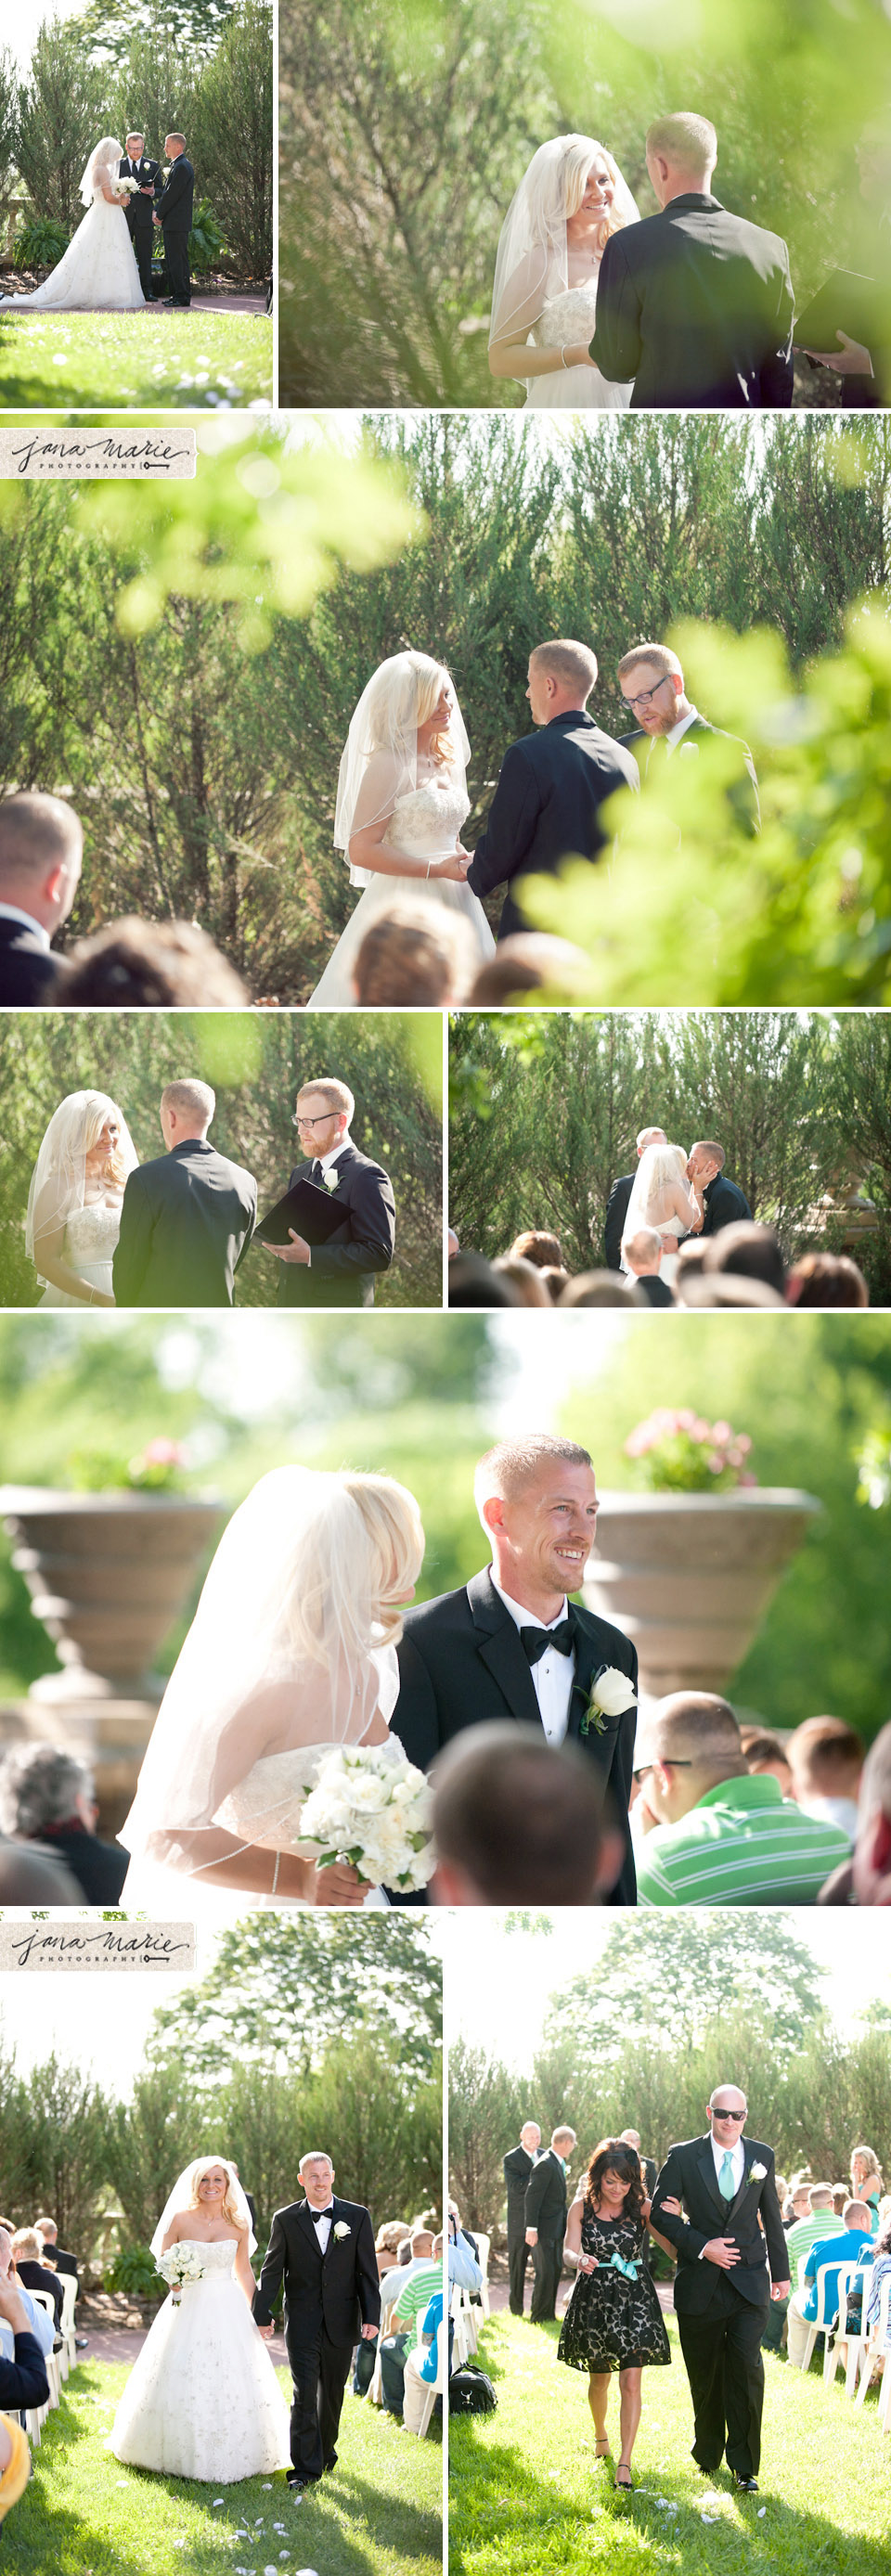 Romantic, sunset weddings, greens, bride & groom, family, Family photography, Kansas City weddings, EA Bride, Jana Marler